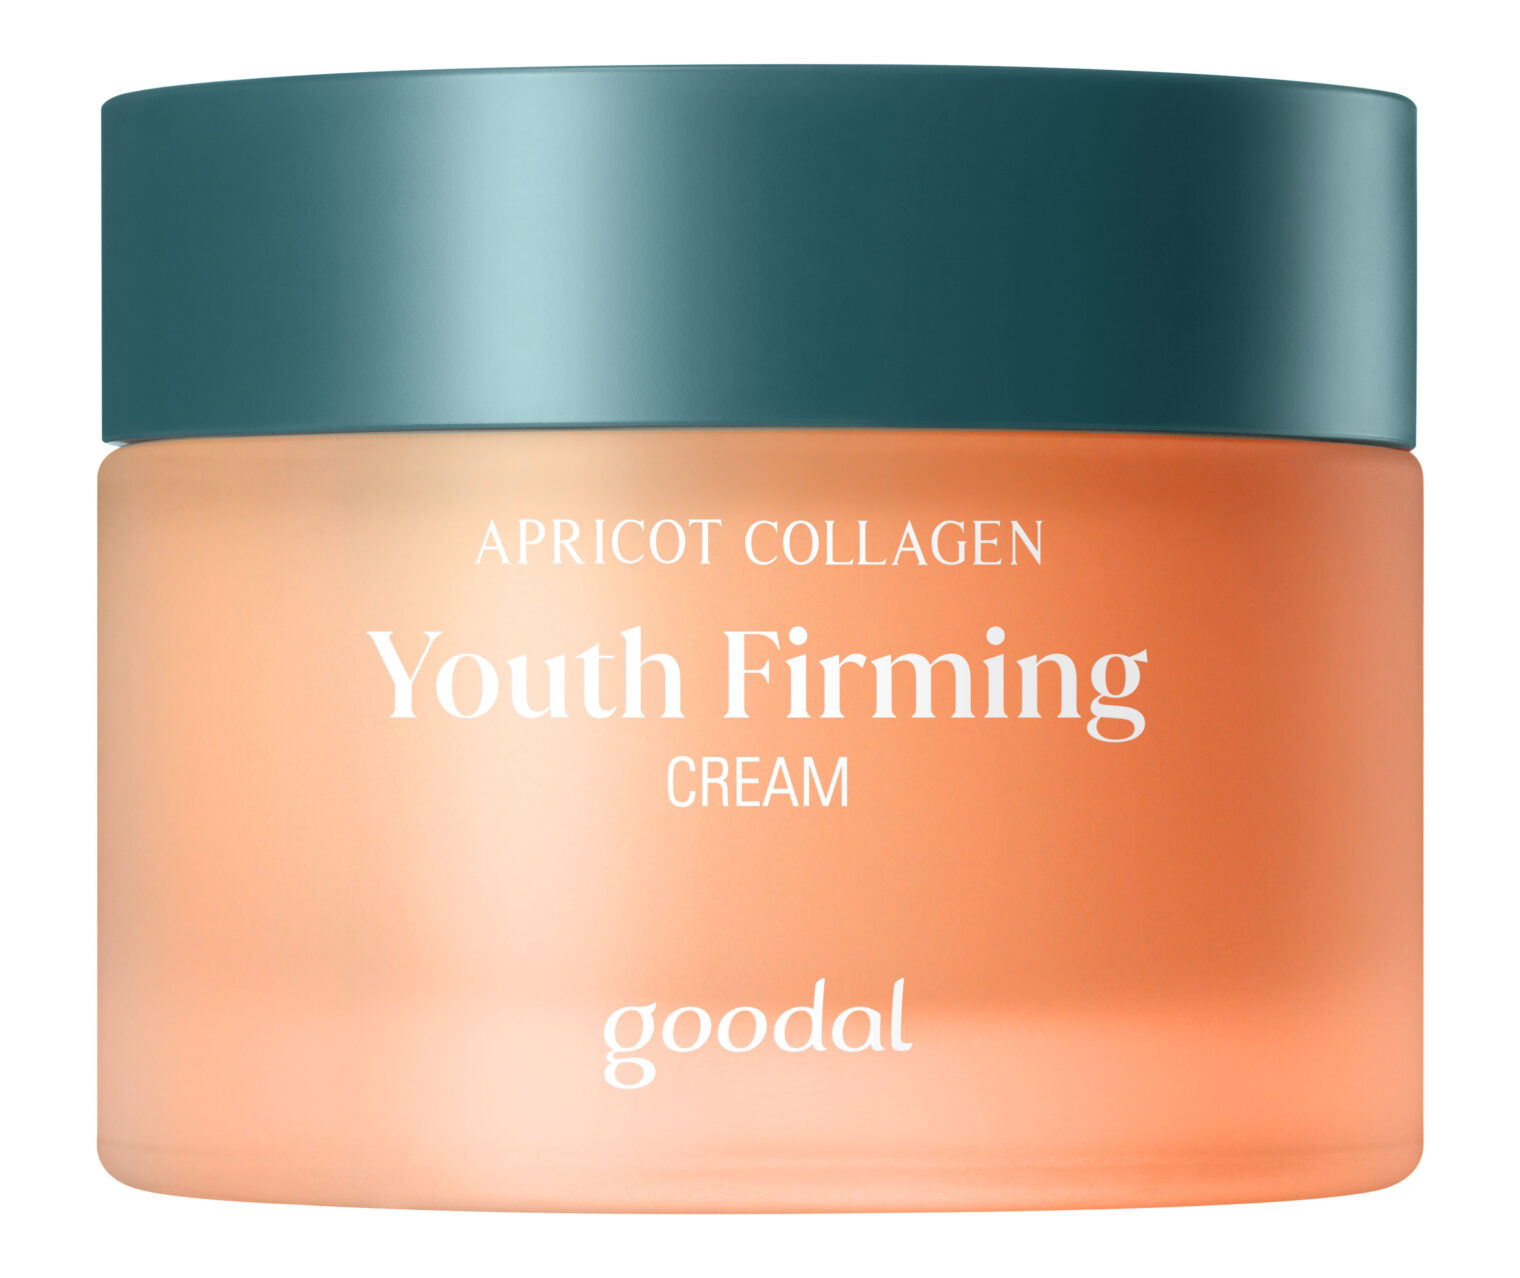 goodal apricot firming cream